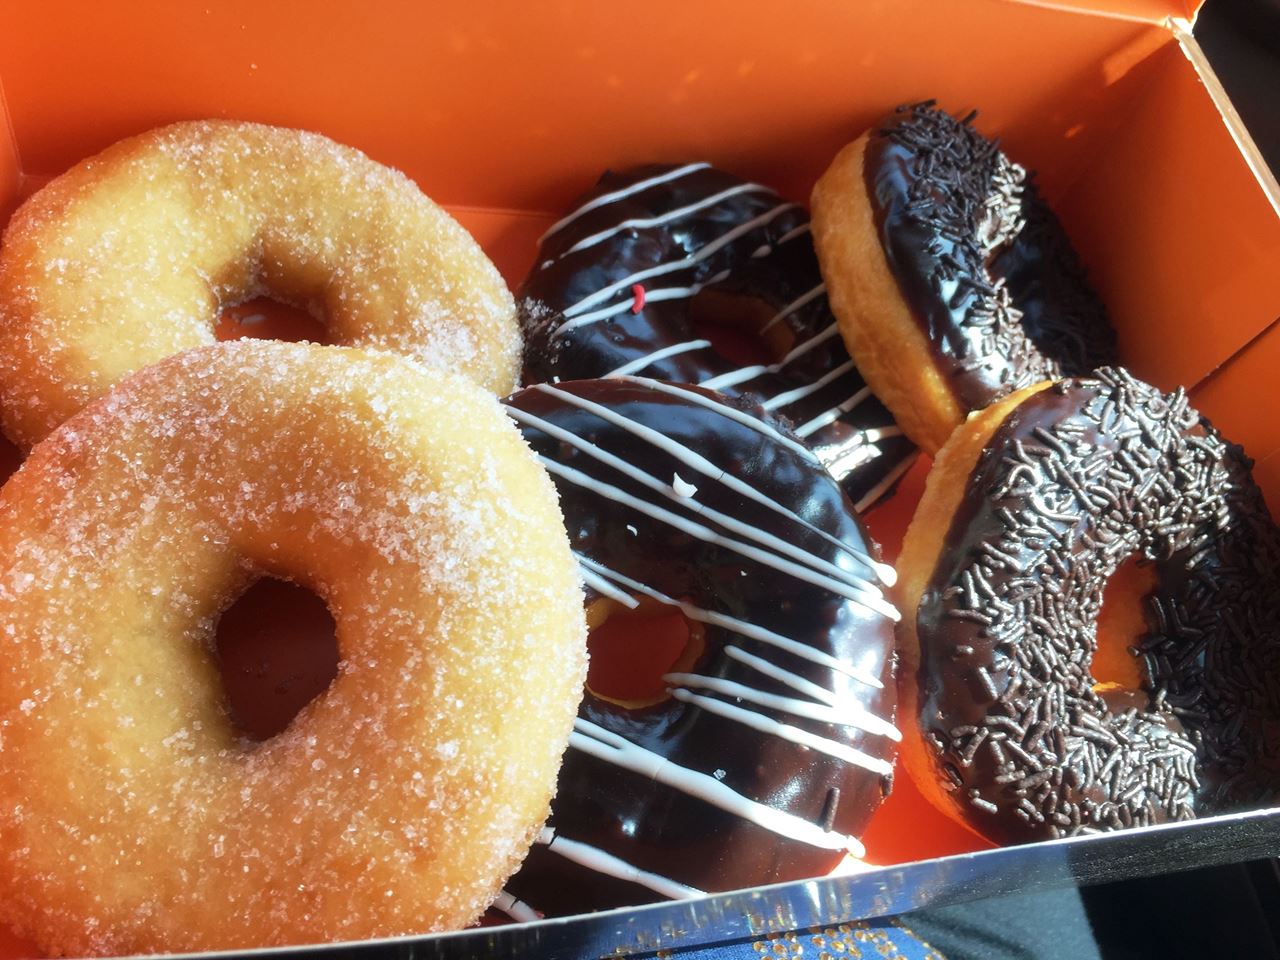 Donuts from La Baguette